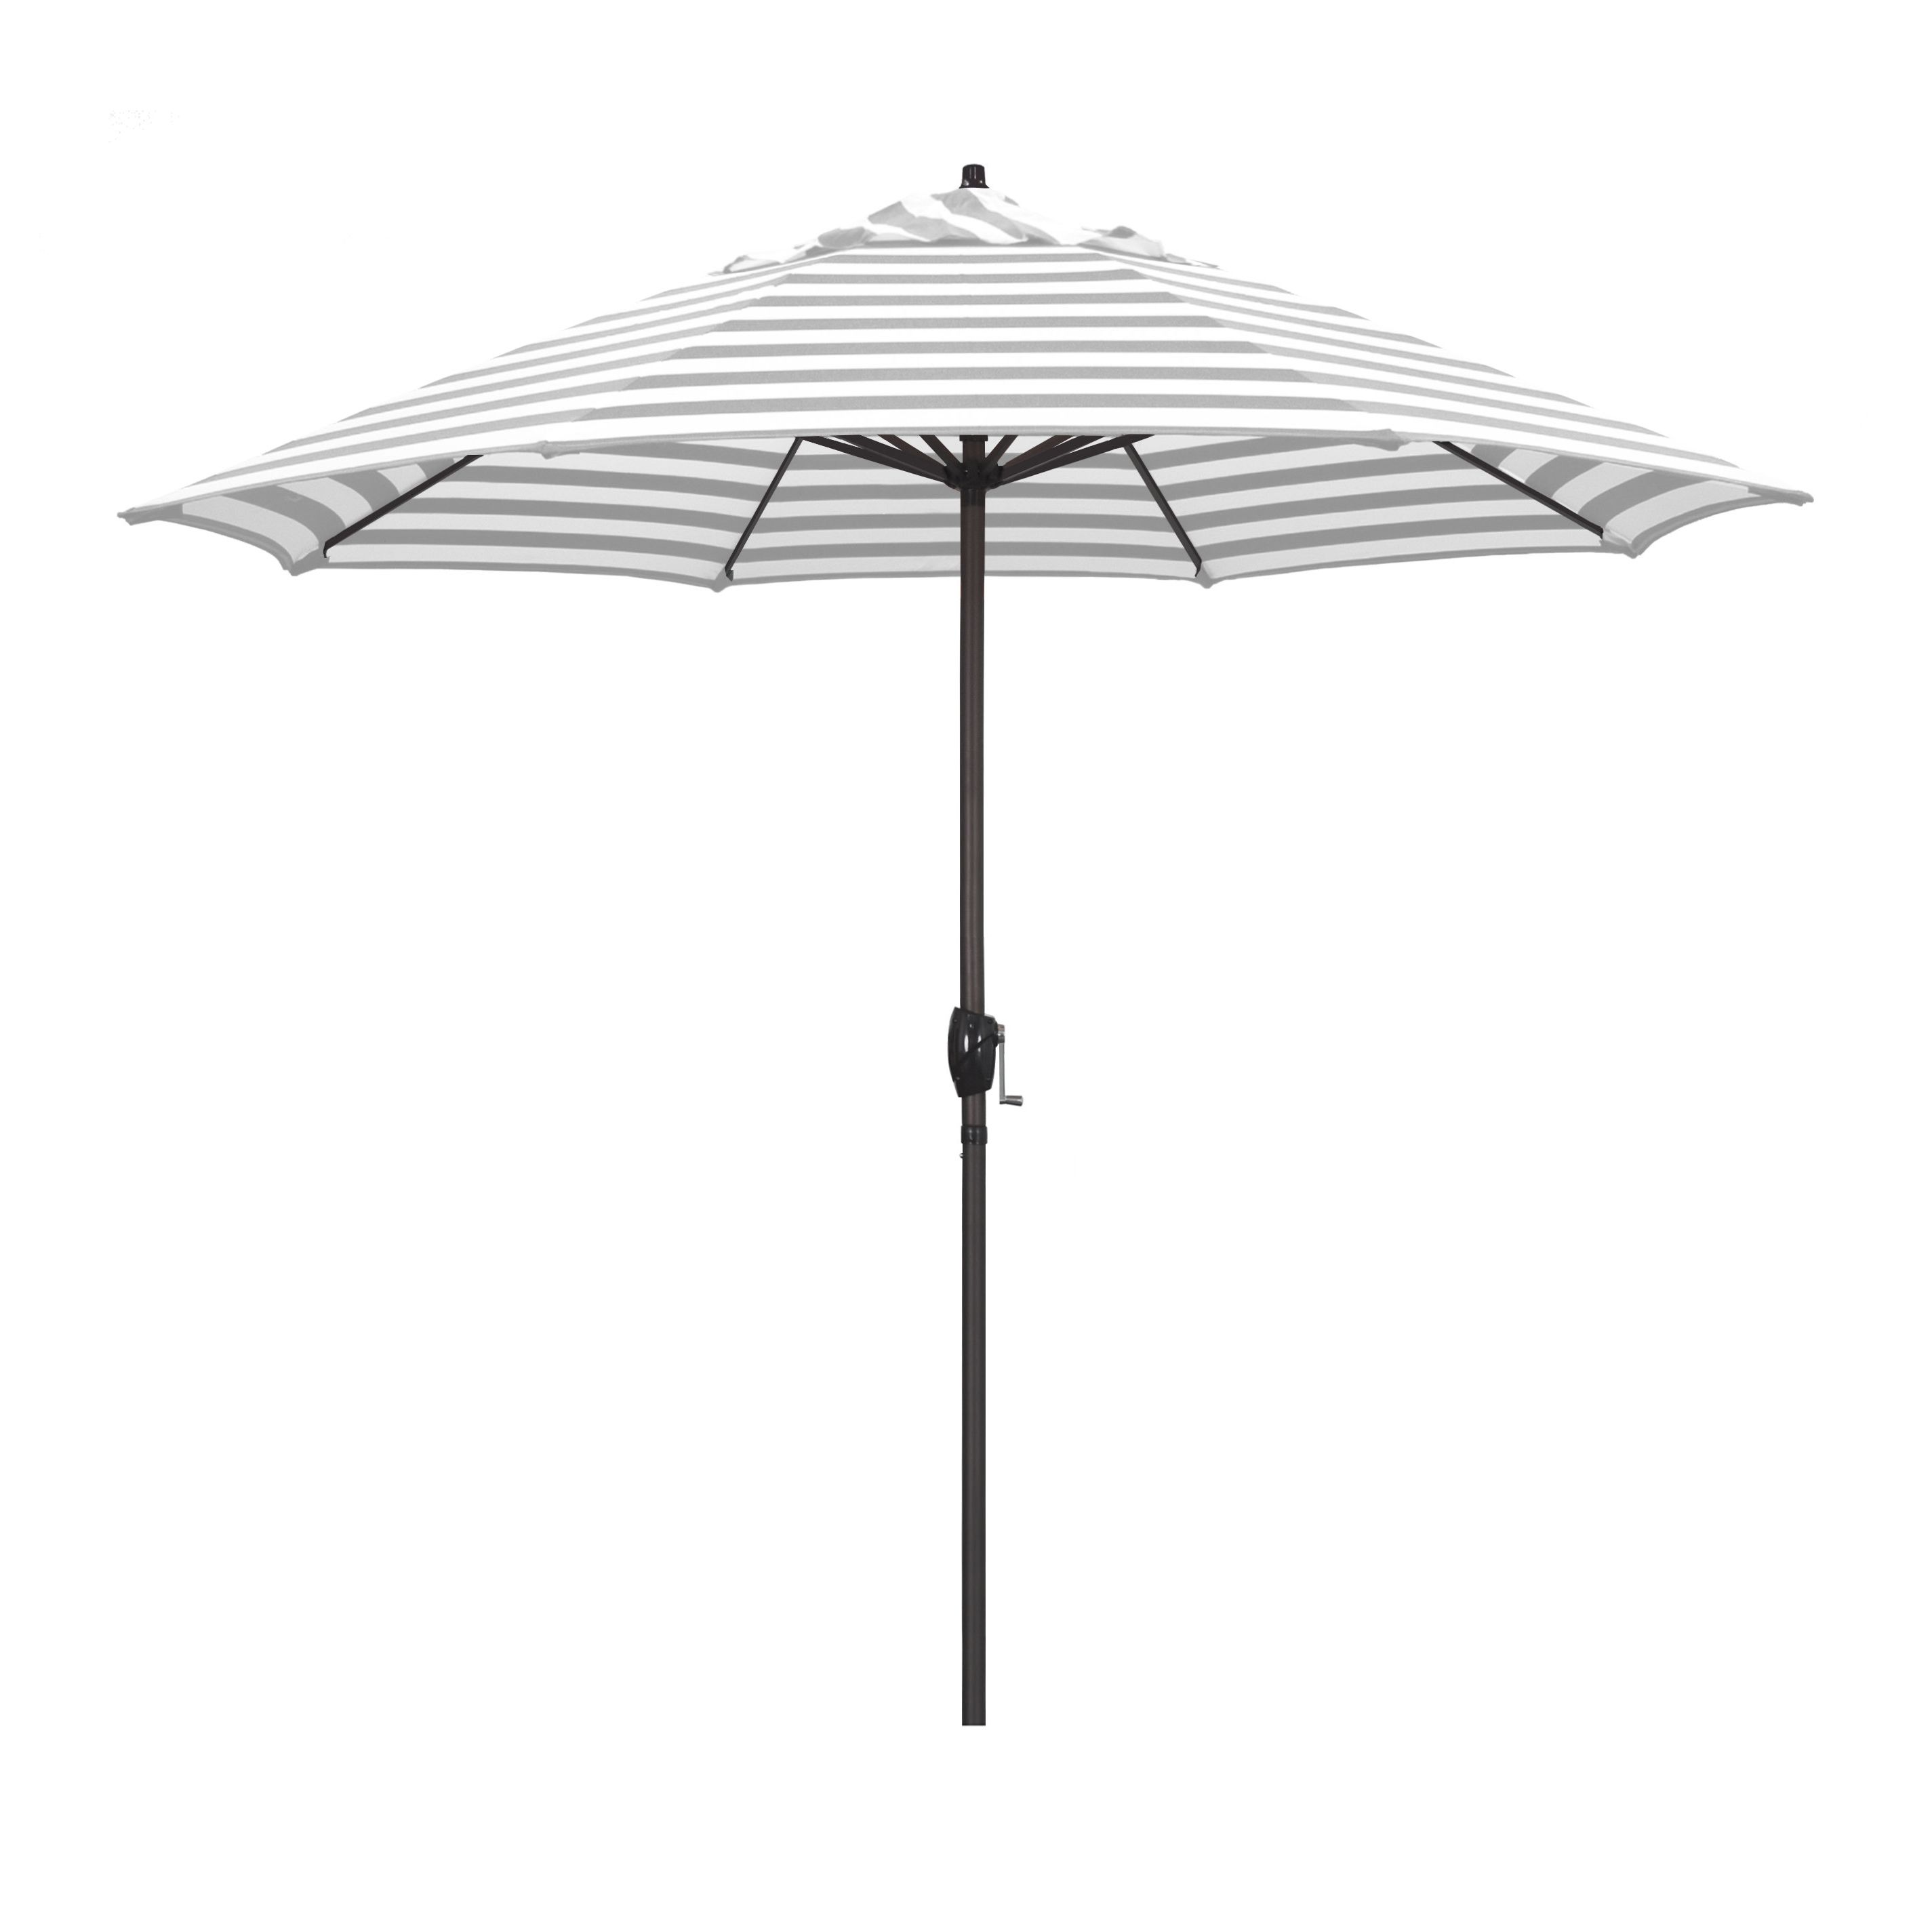 Fashionable Kelton Market Umbrellas Intended For Cardine 9' Market Umbrella (View 19 of 20)